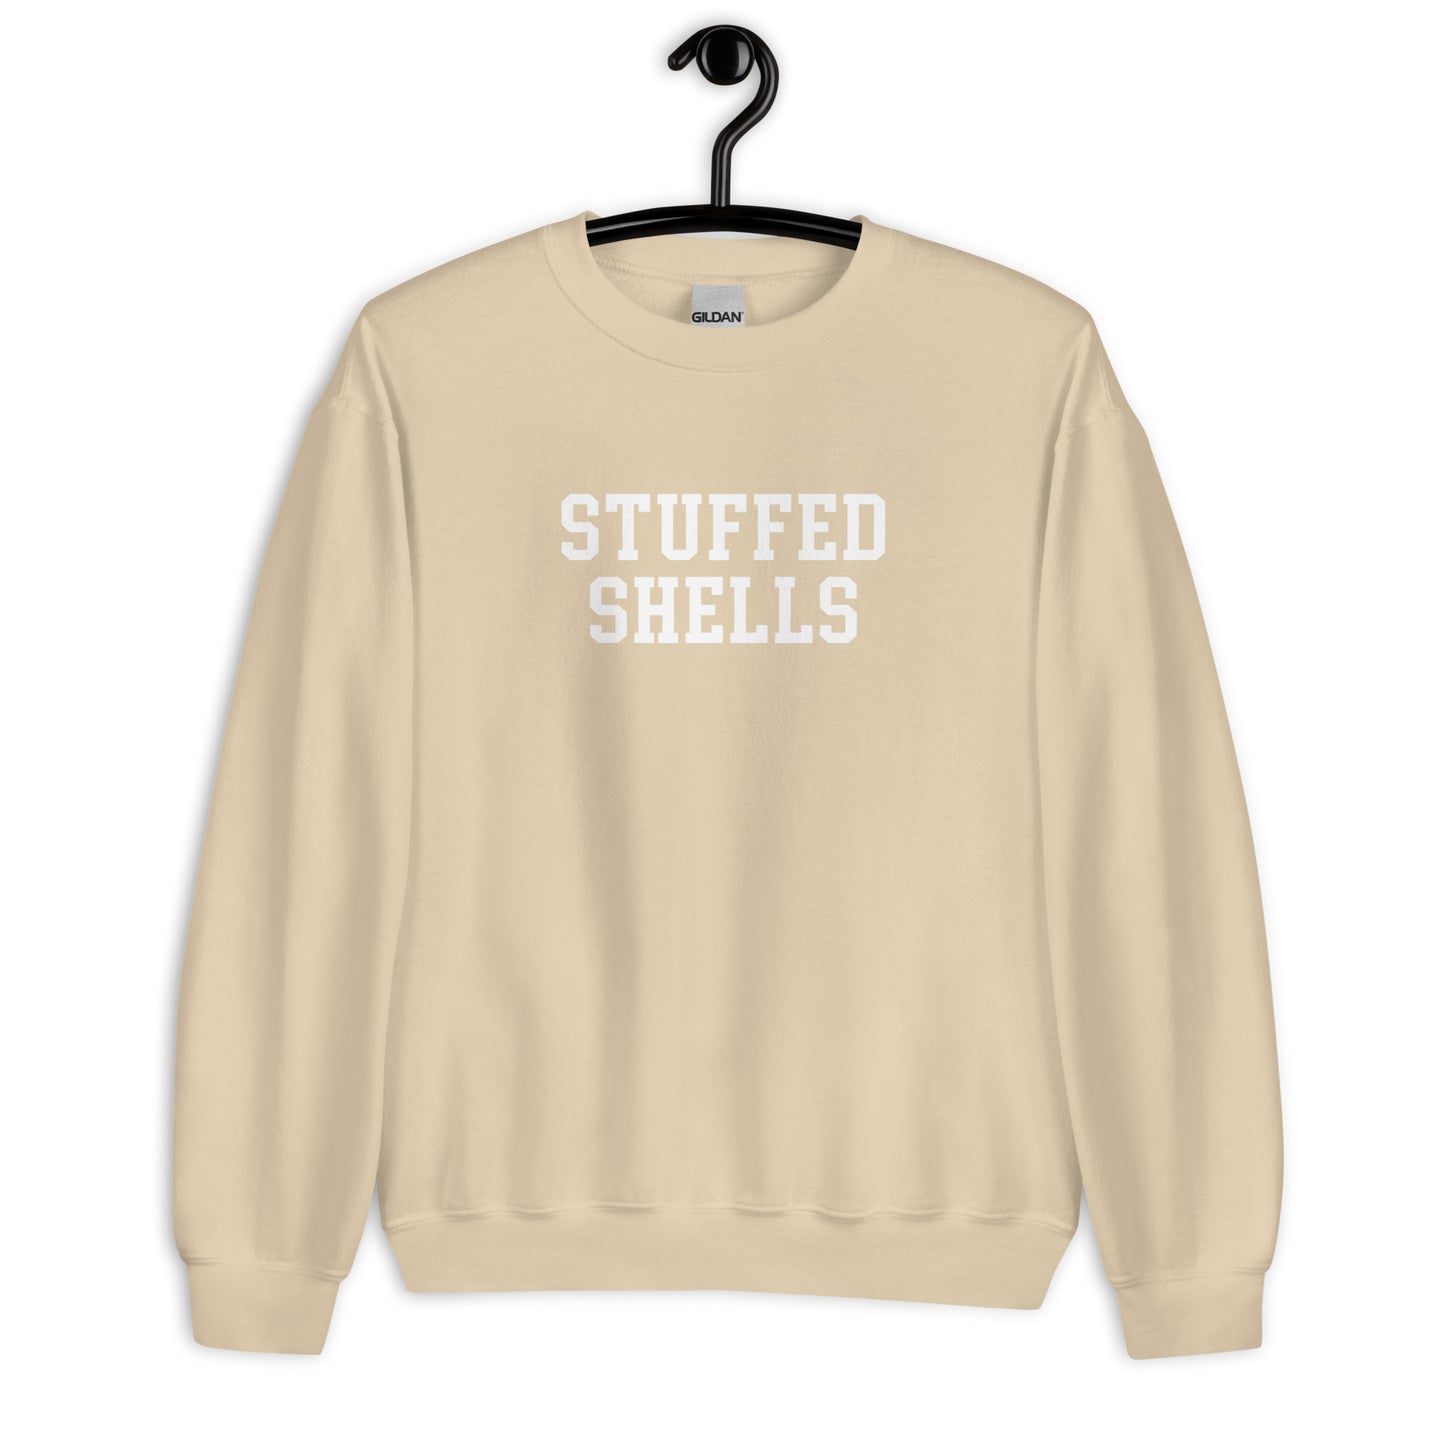 Stuffed Shells Sweatshirt - Straight Font